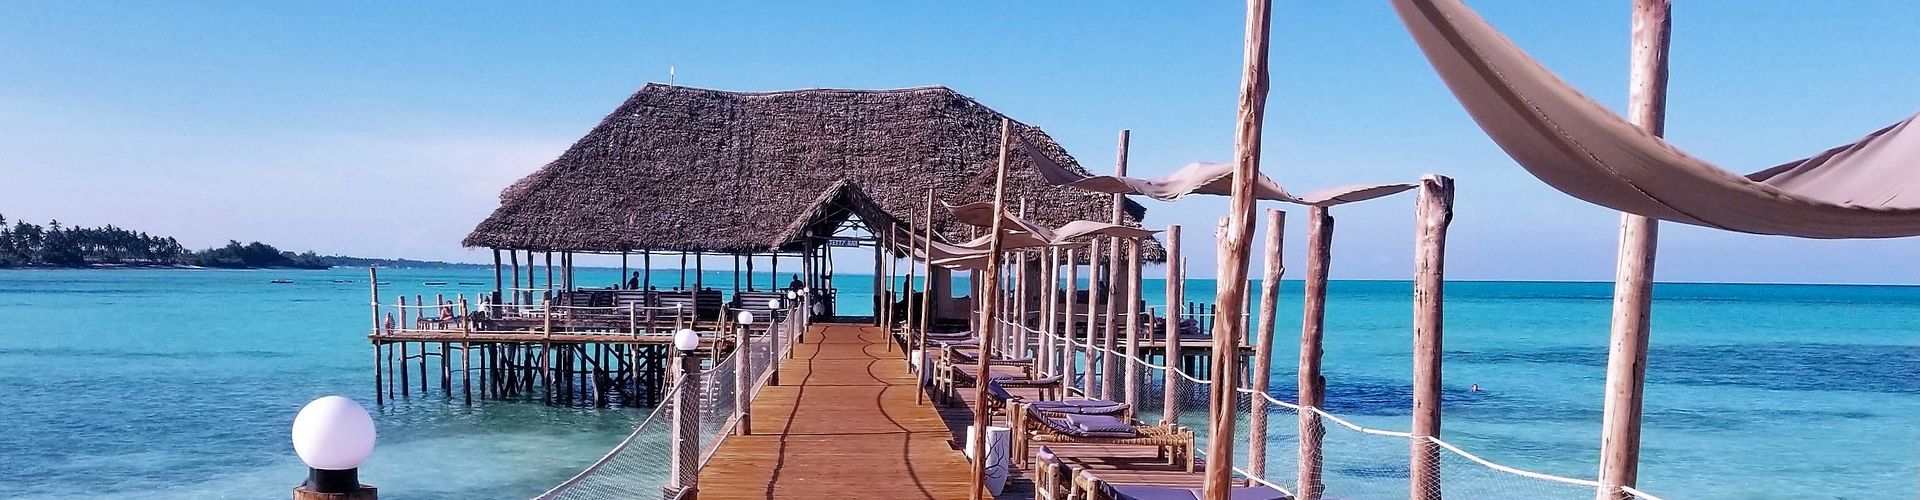 La jetée de l'hôtel Reef & Beach à Zanzibar